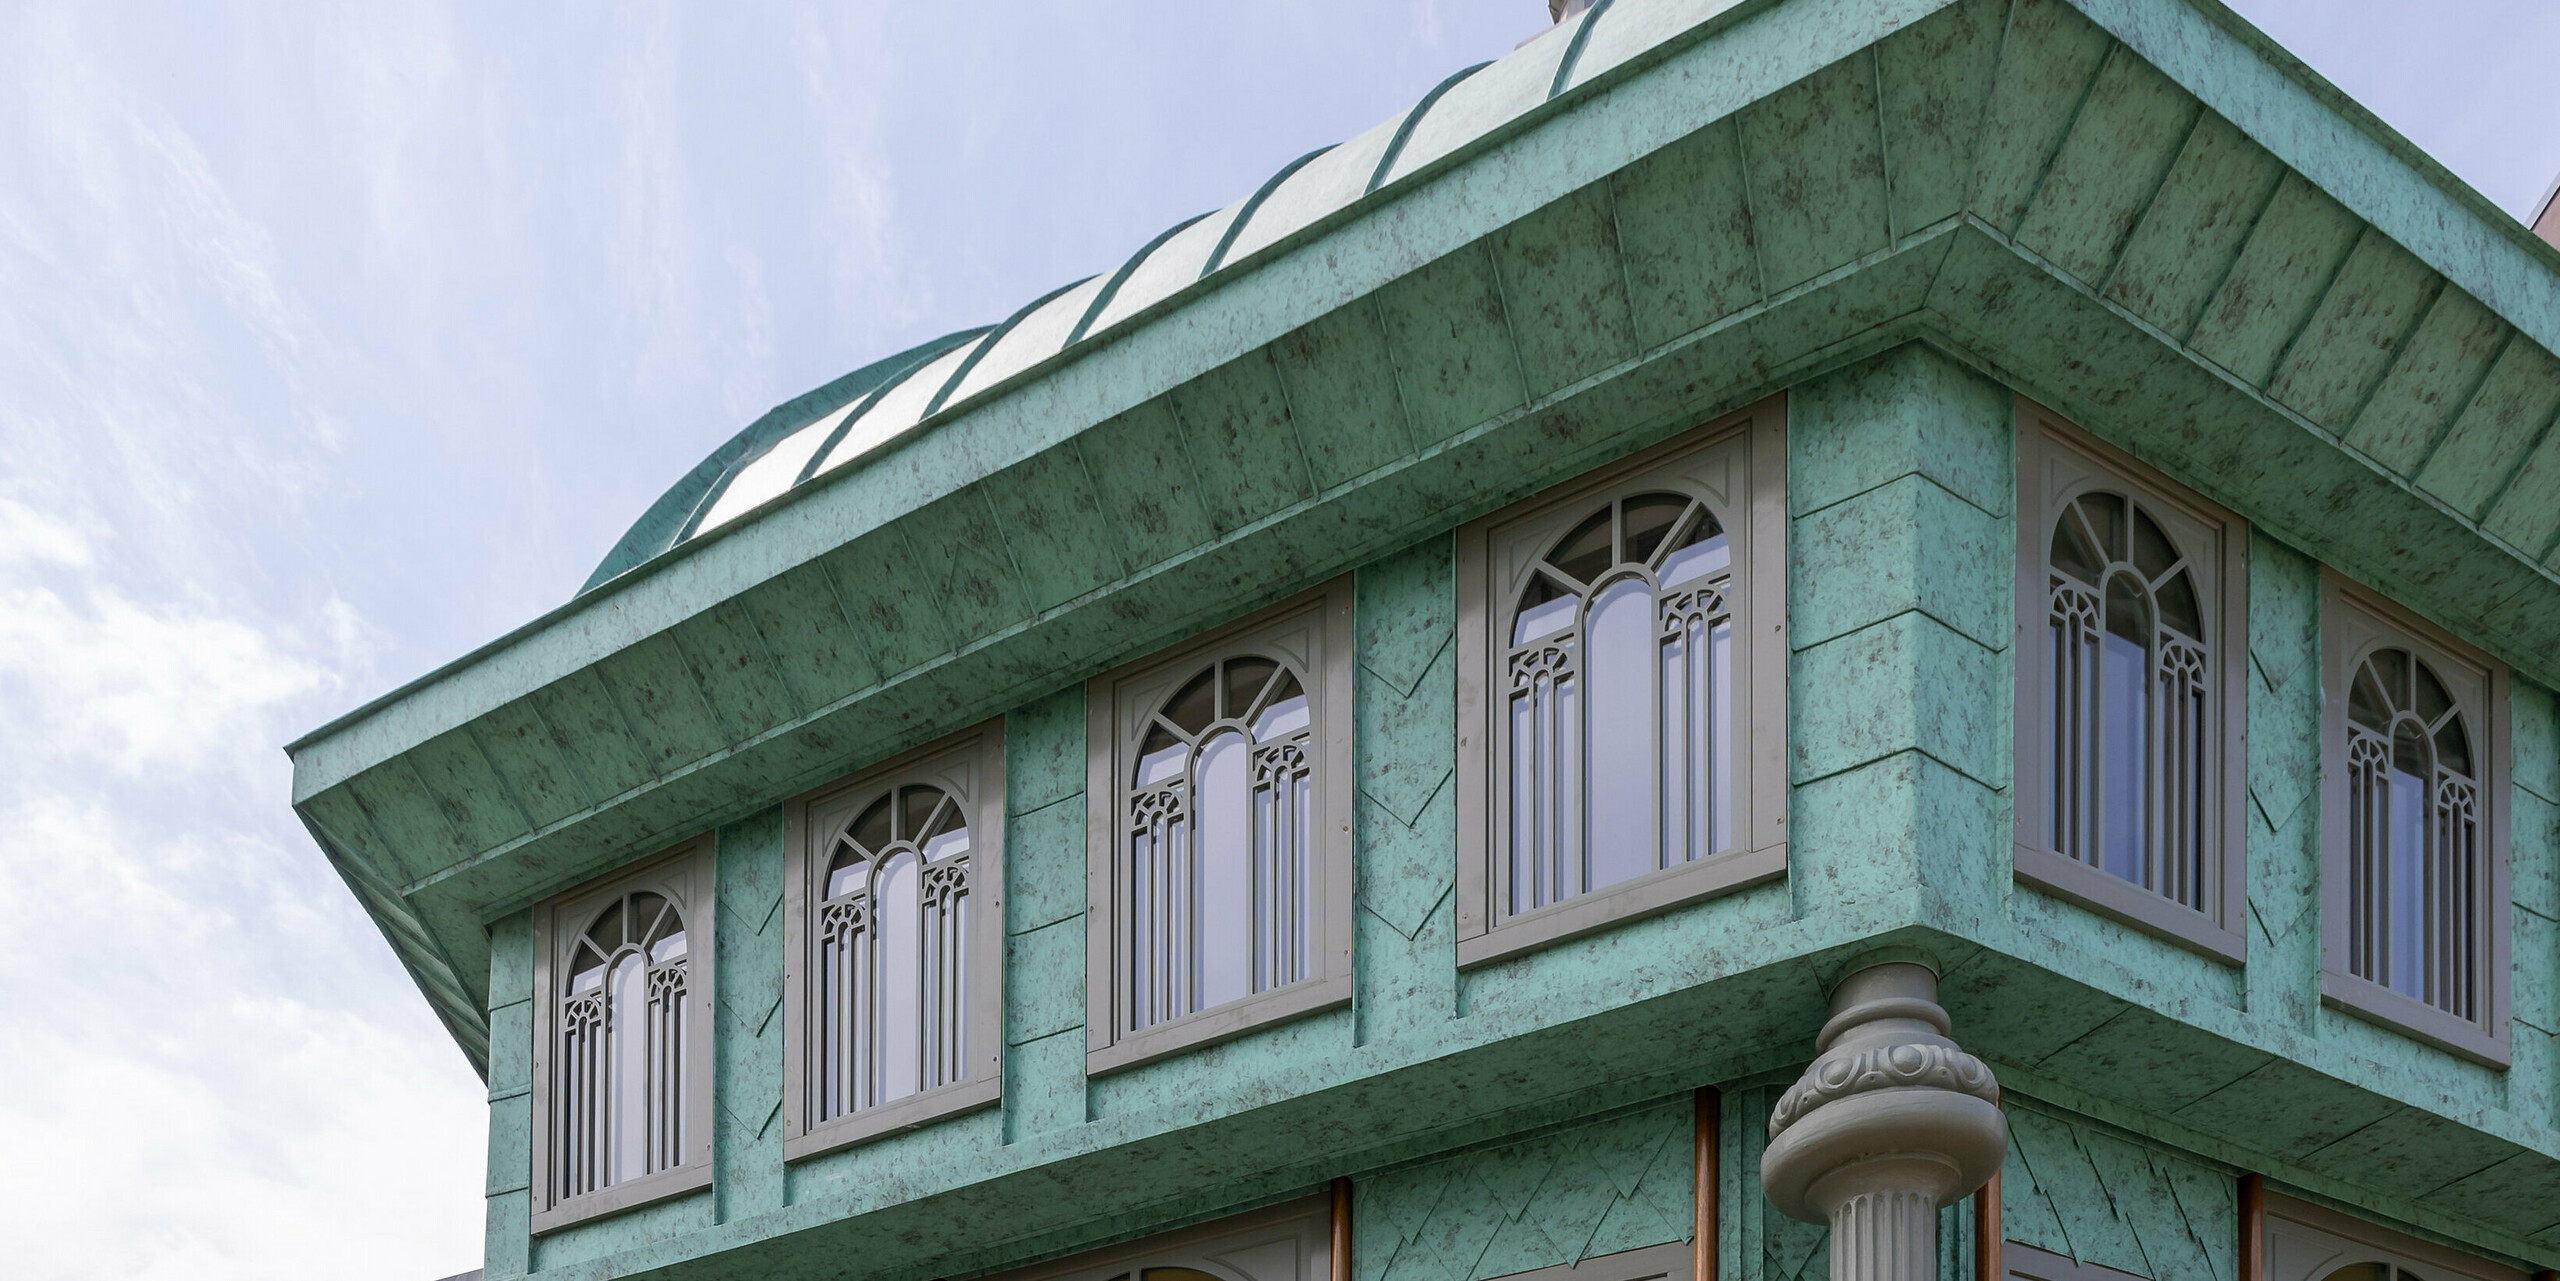 Summerhouse of Lawlor's Hotel in Naas (Ireland) with PREFA aluminium façade